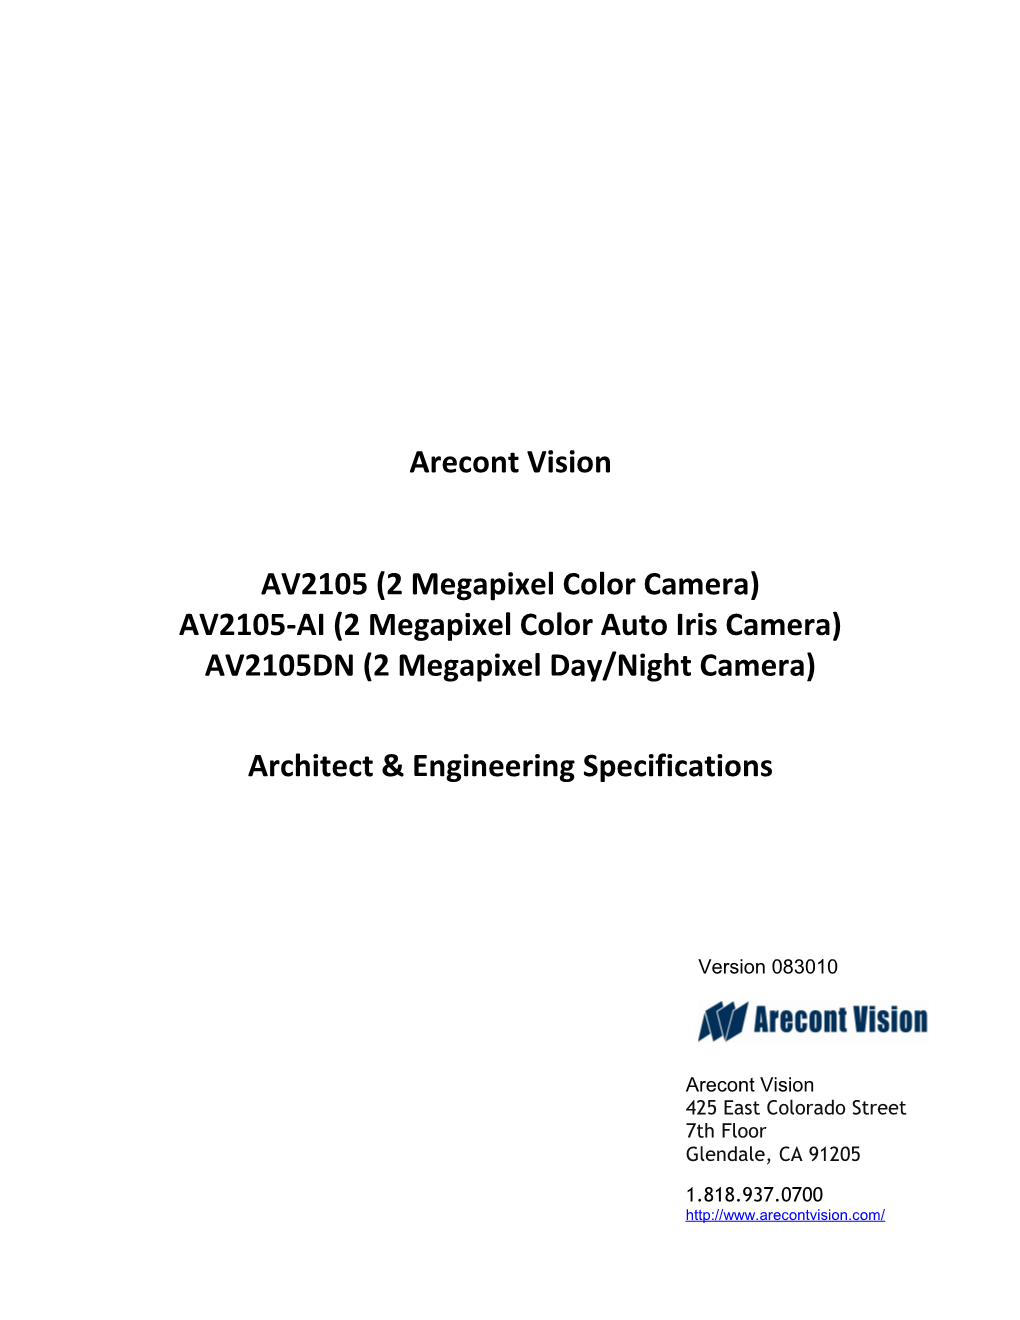 AV2105-AI (2 Megapixel Color Auto Iris Camera)